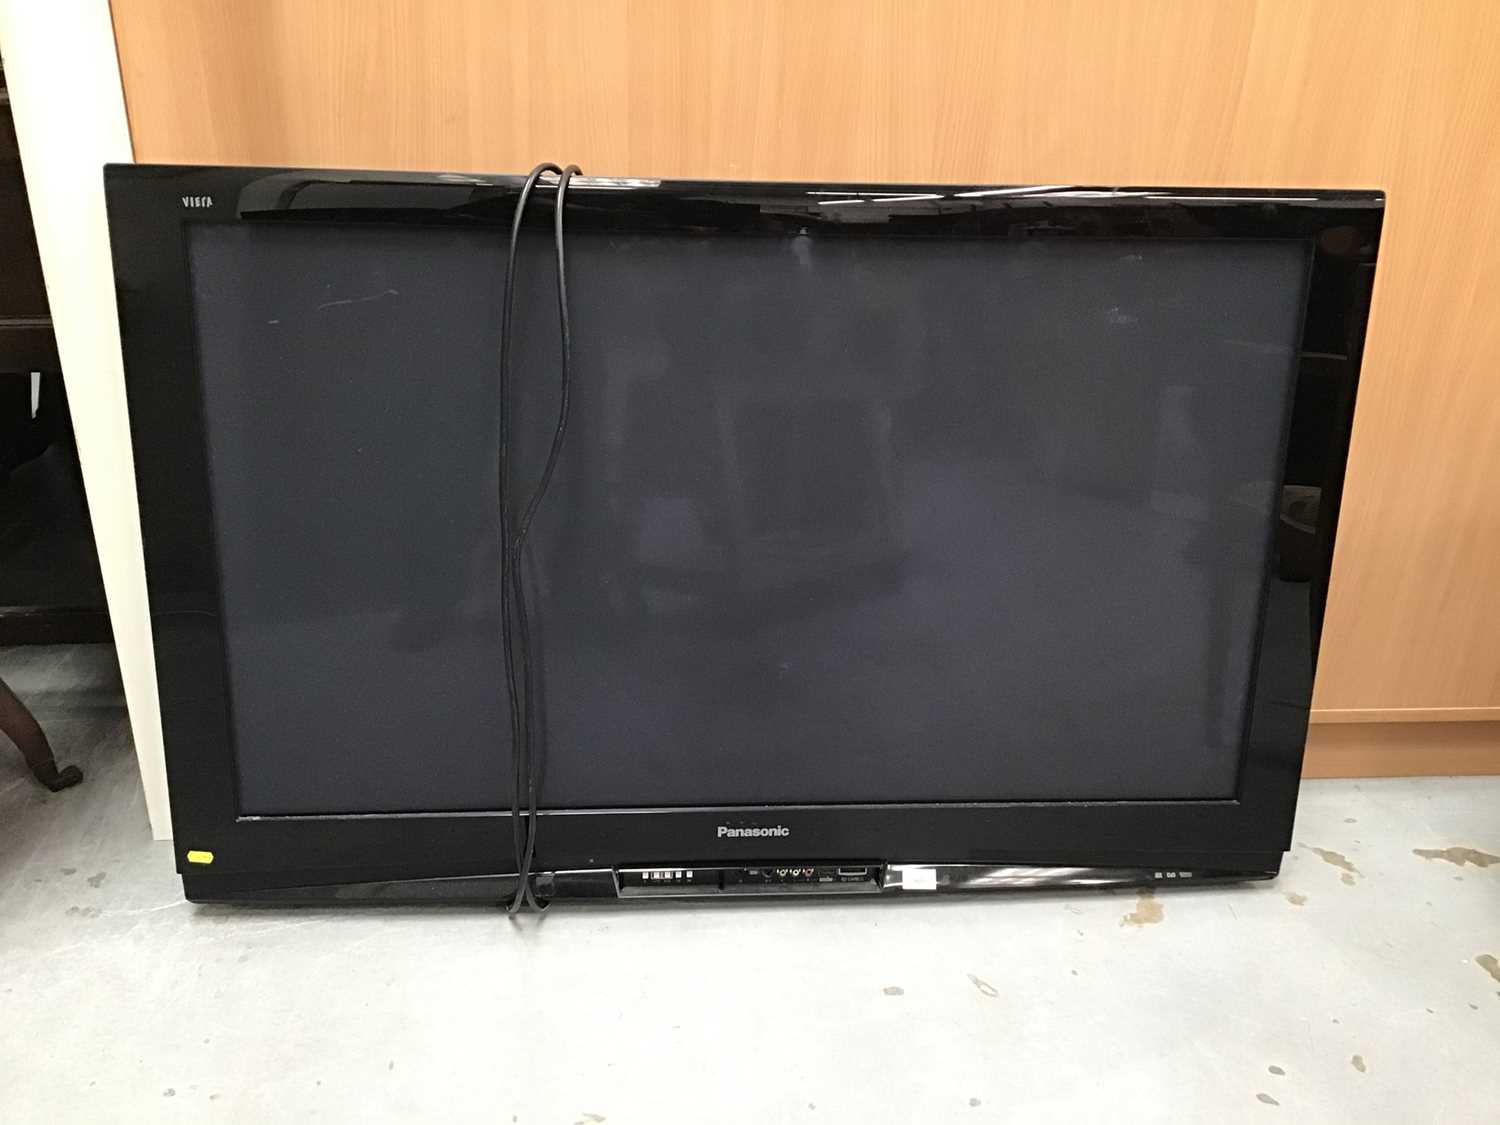 Lot 985 - Panasonic Viera wall mounted flatscreen television - model no TH-50PZ81B with remote control